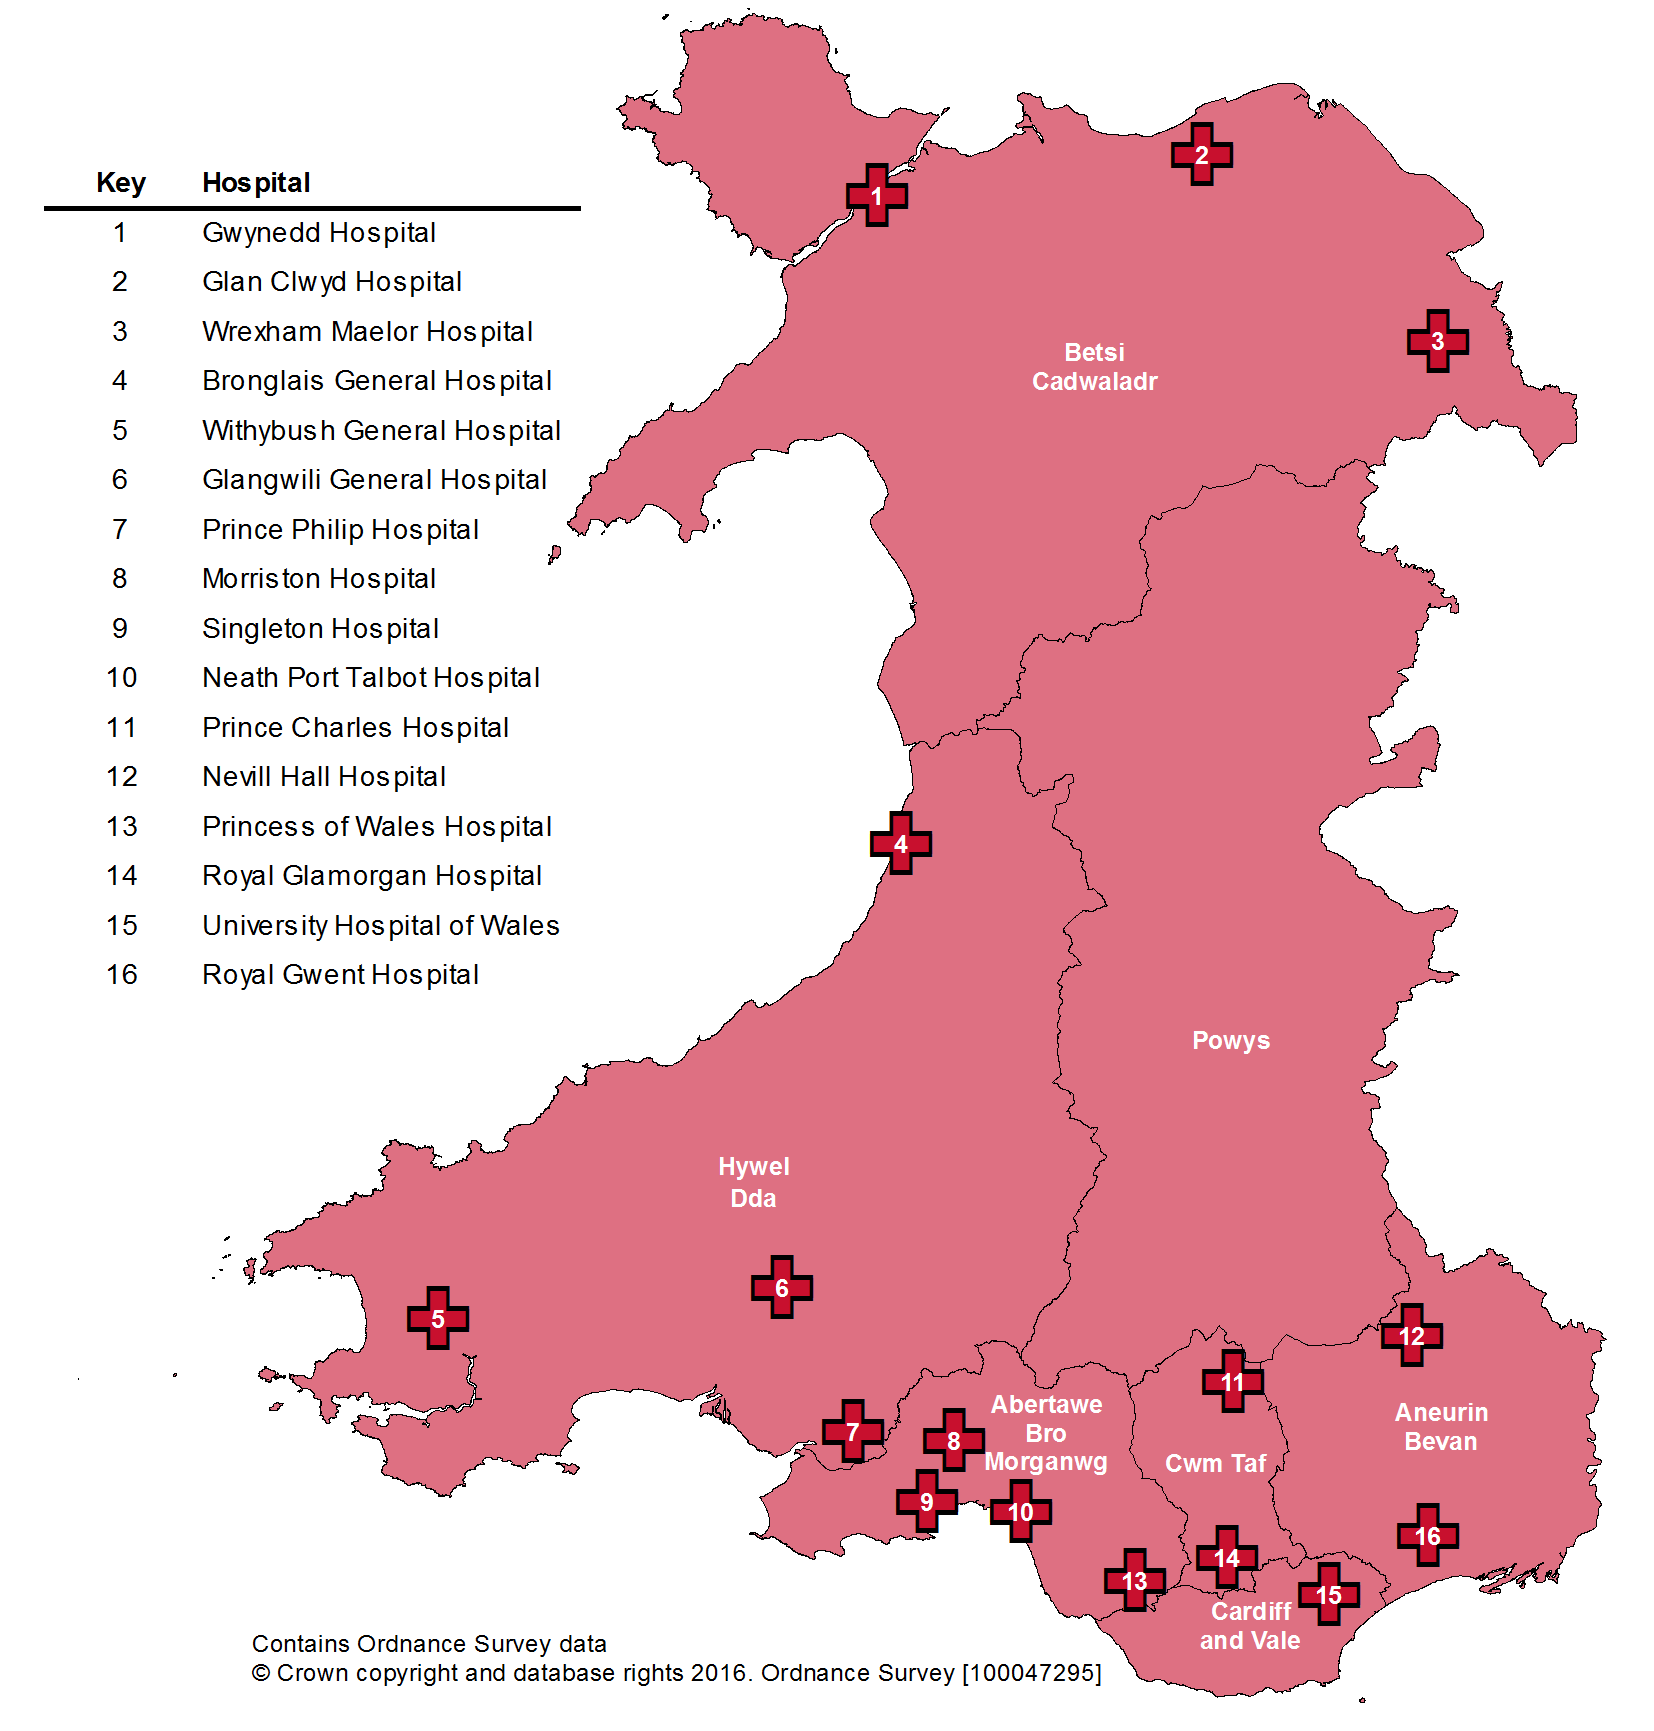 Hospital in Wales